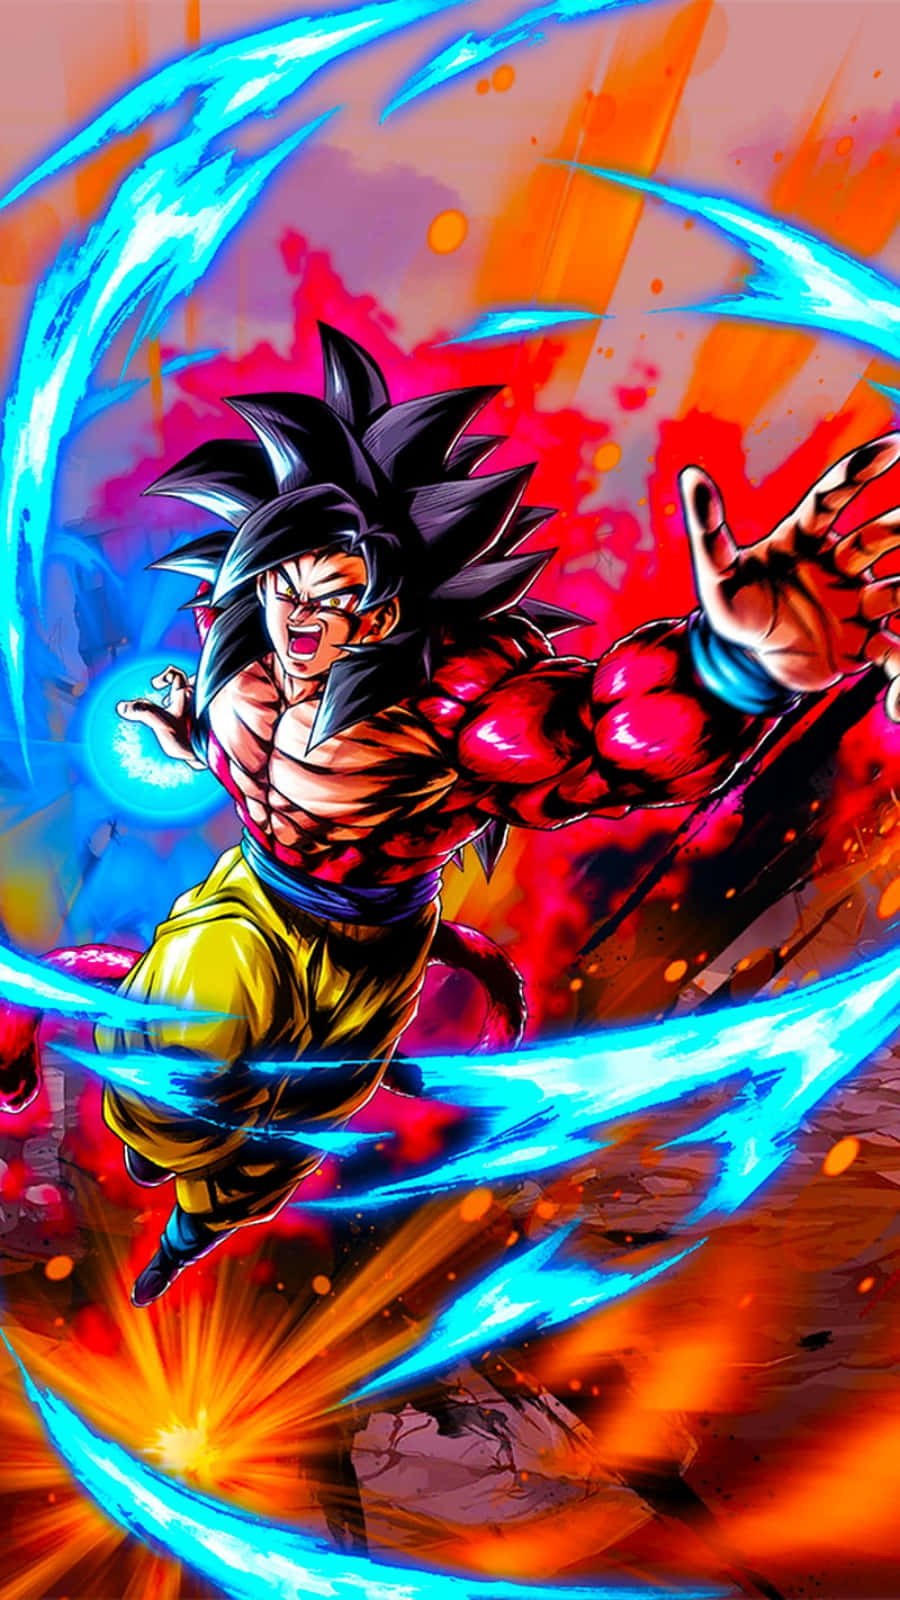 Goku Super Saiyan 4 Dragon Ball Super iPhone Wallpaper